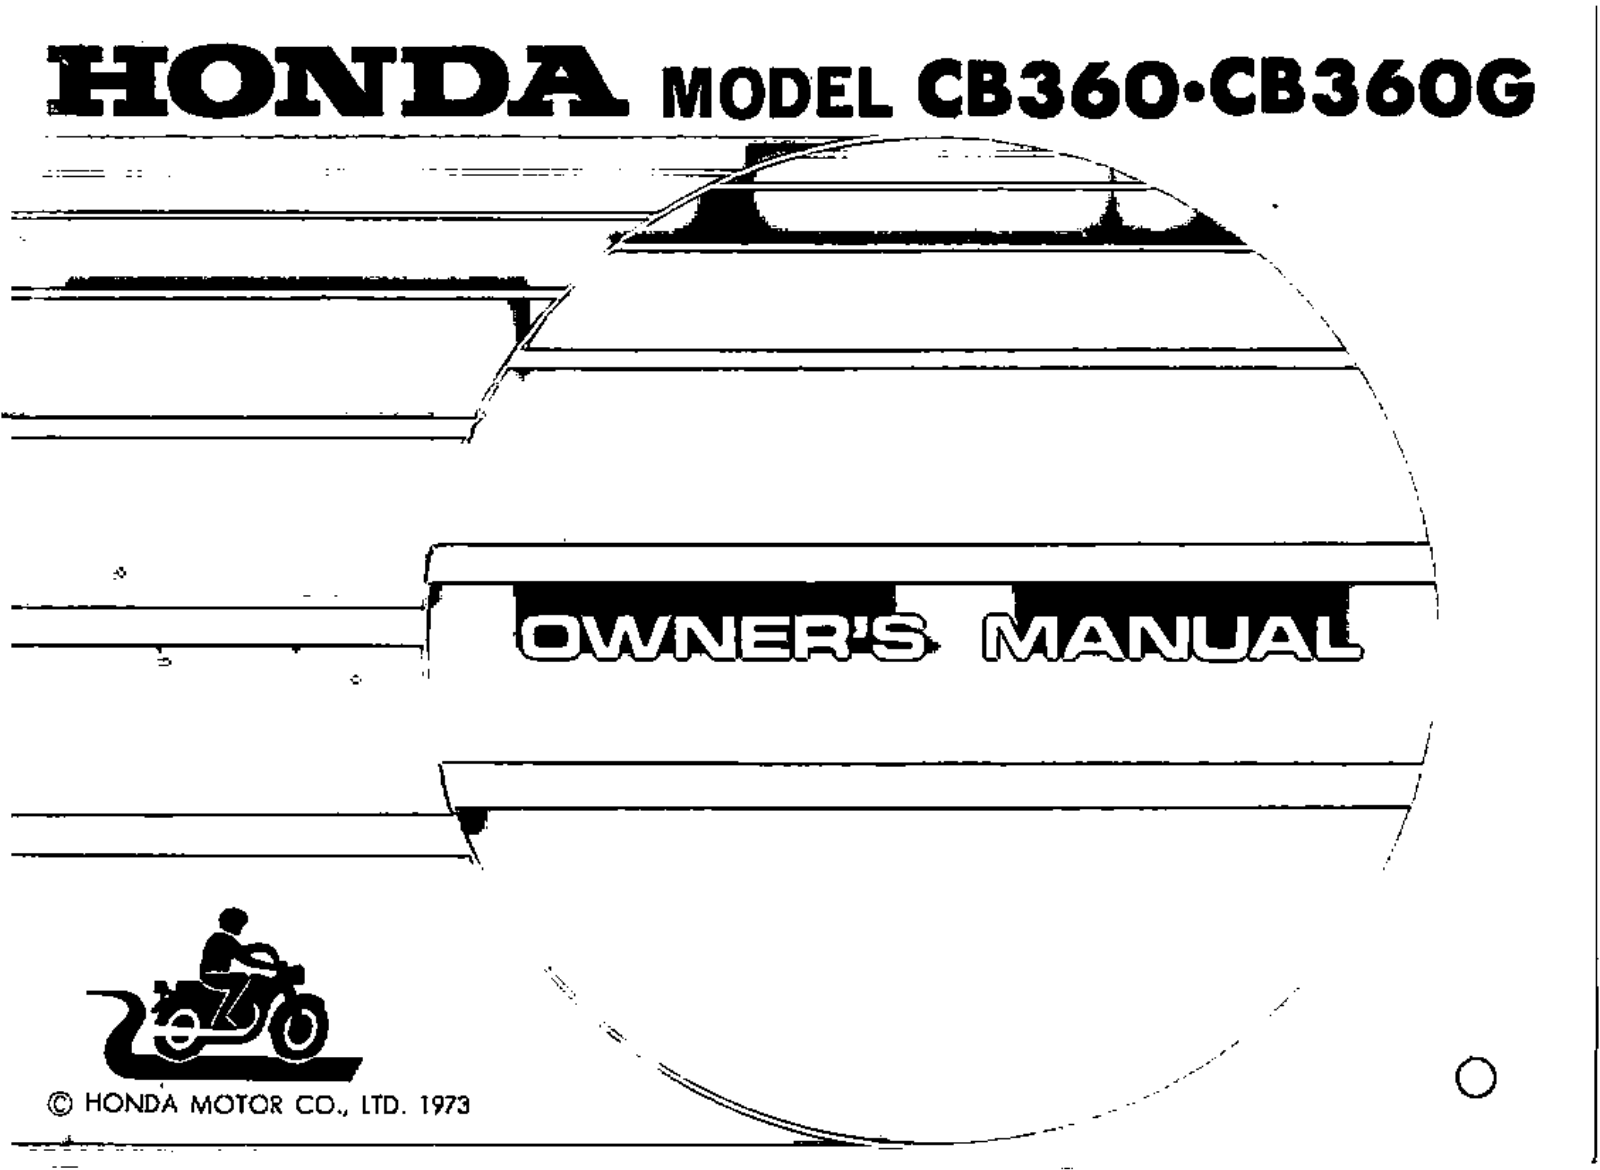 Honda CB360, CB360G 1973 Owner's Manual